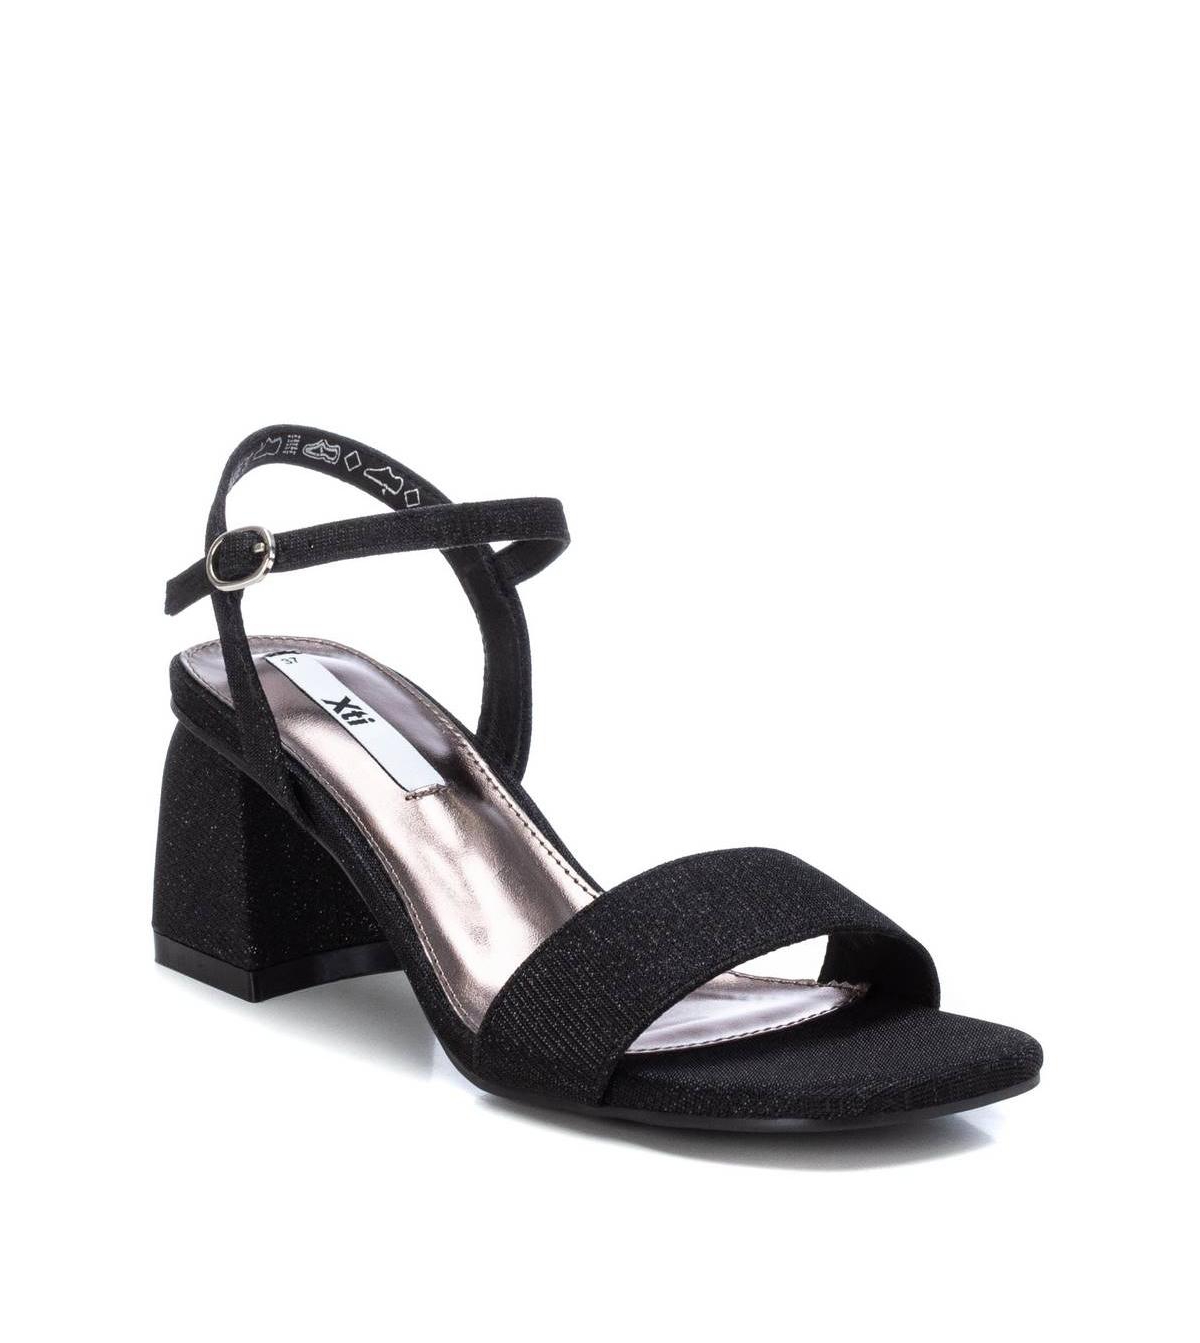 Women's Heeled Sandals By Xti, Black - Black